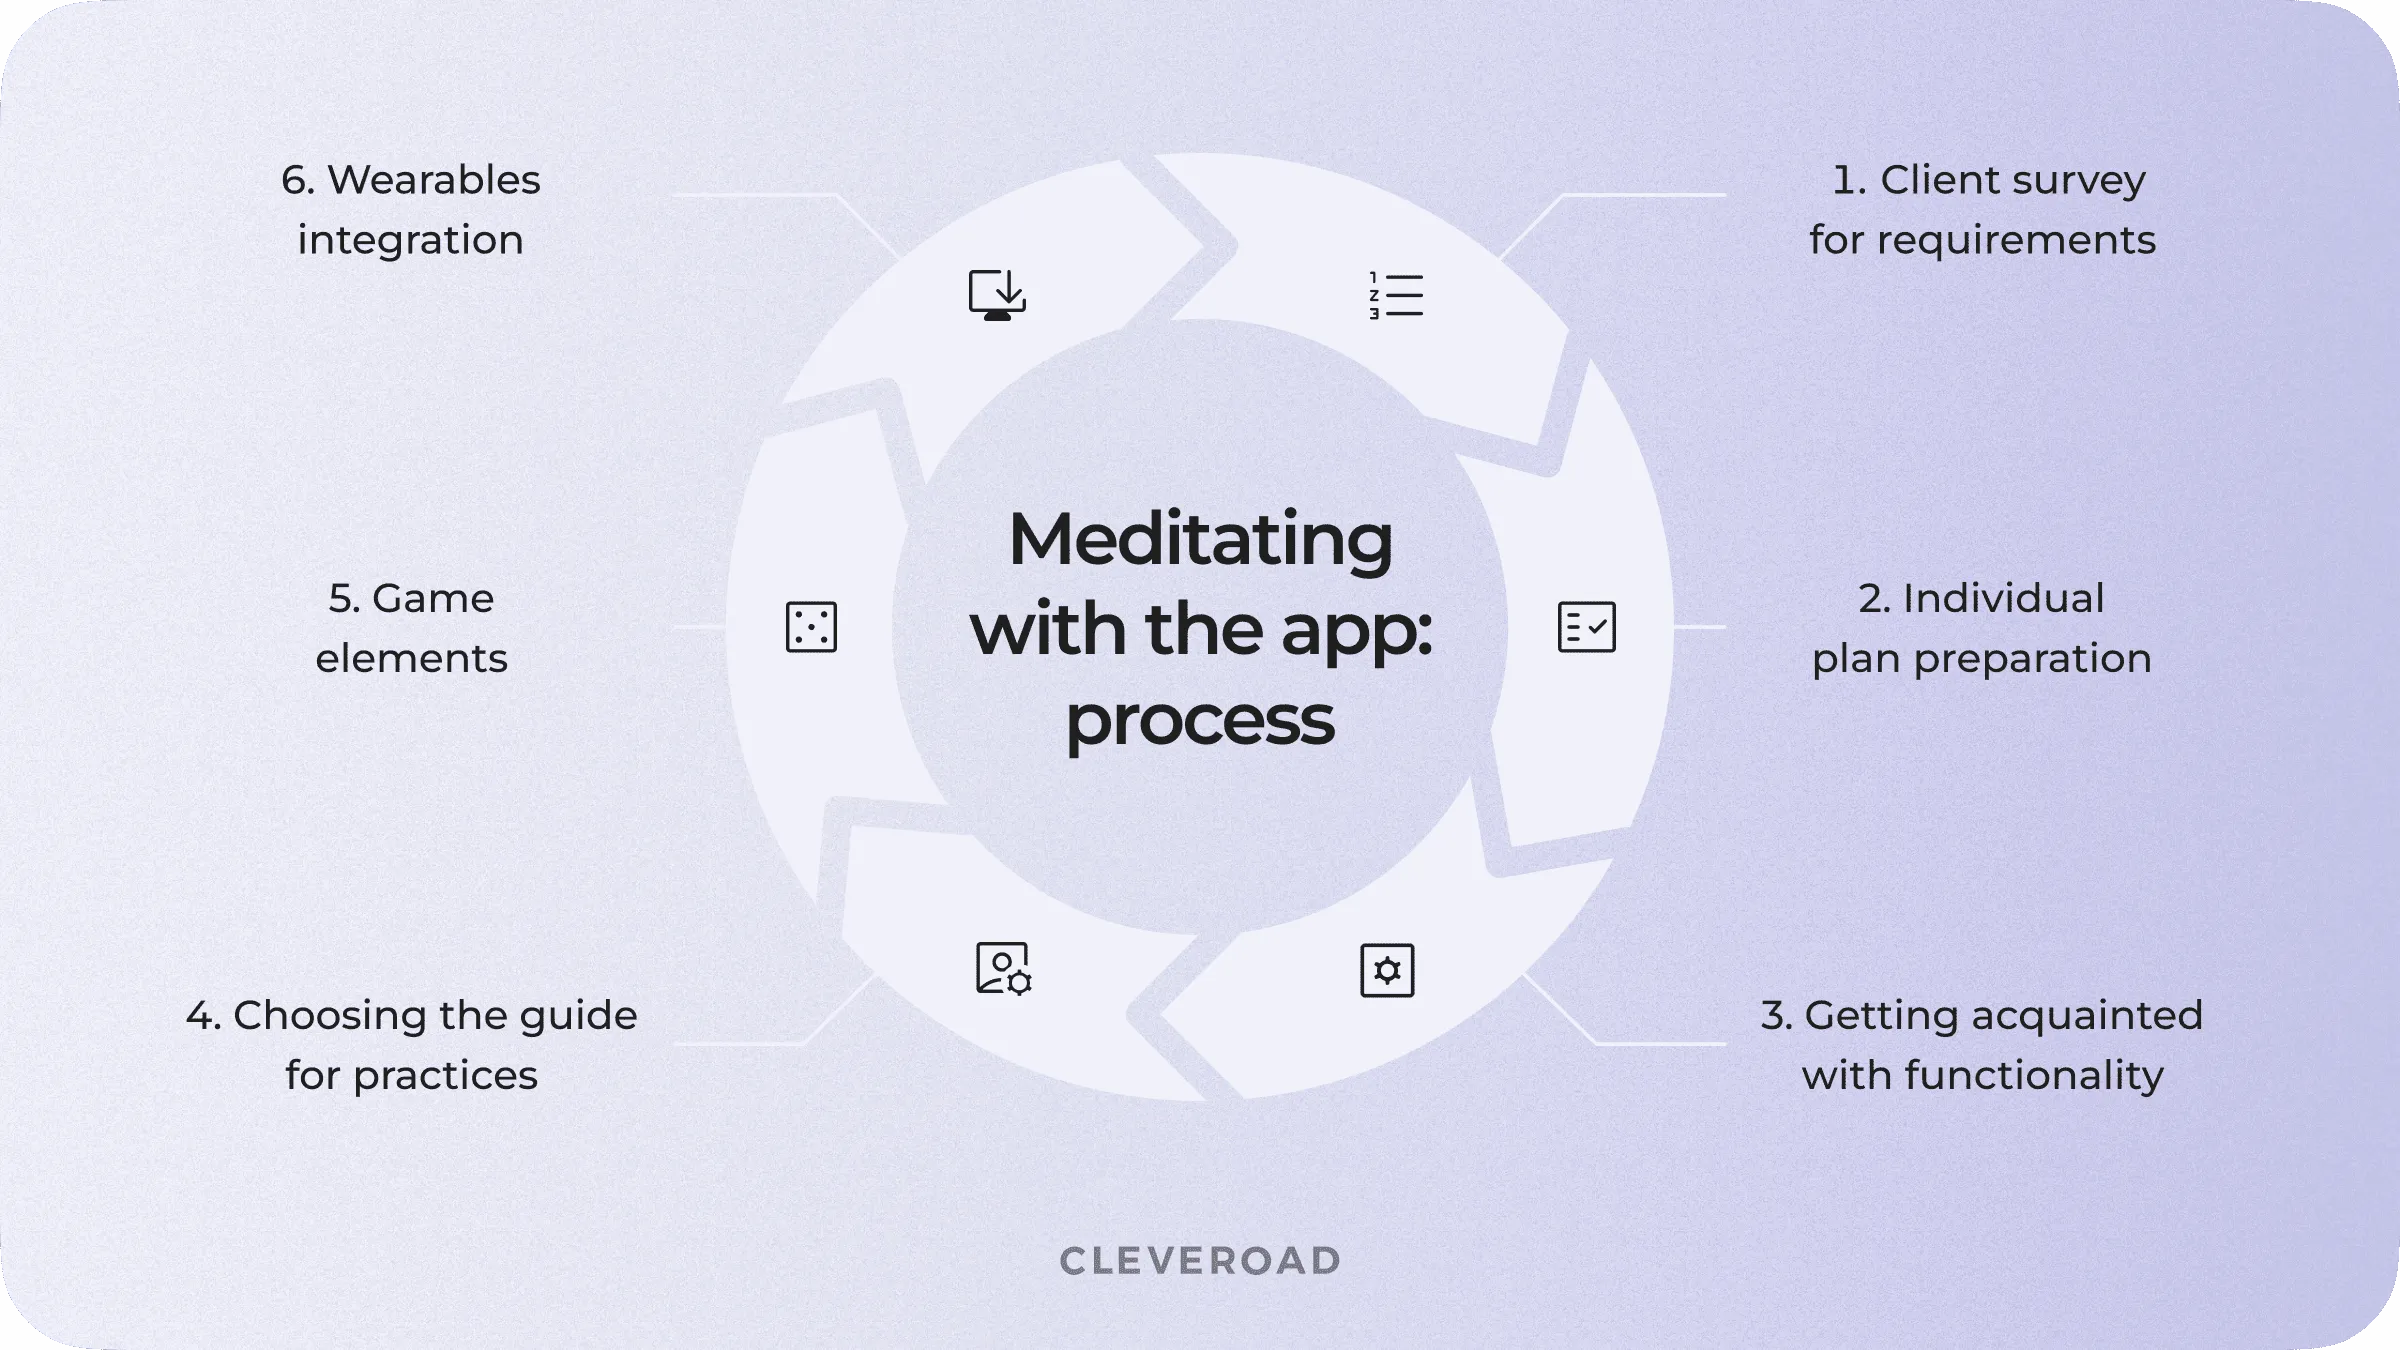 Meditation with an app: gradually